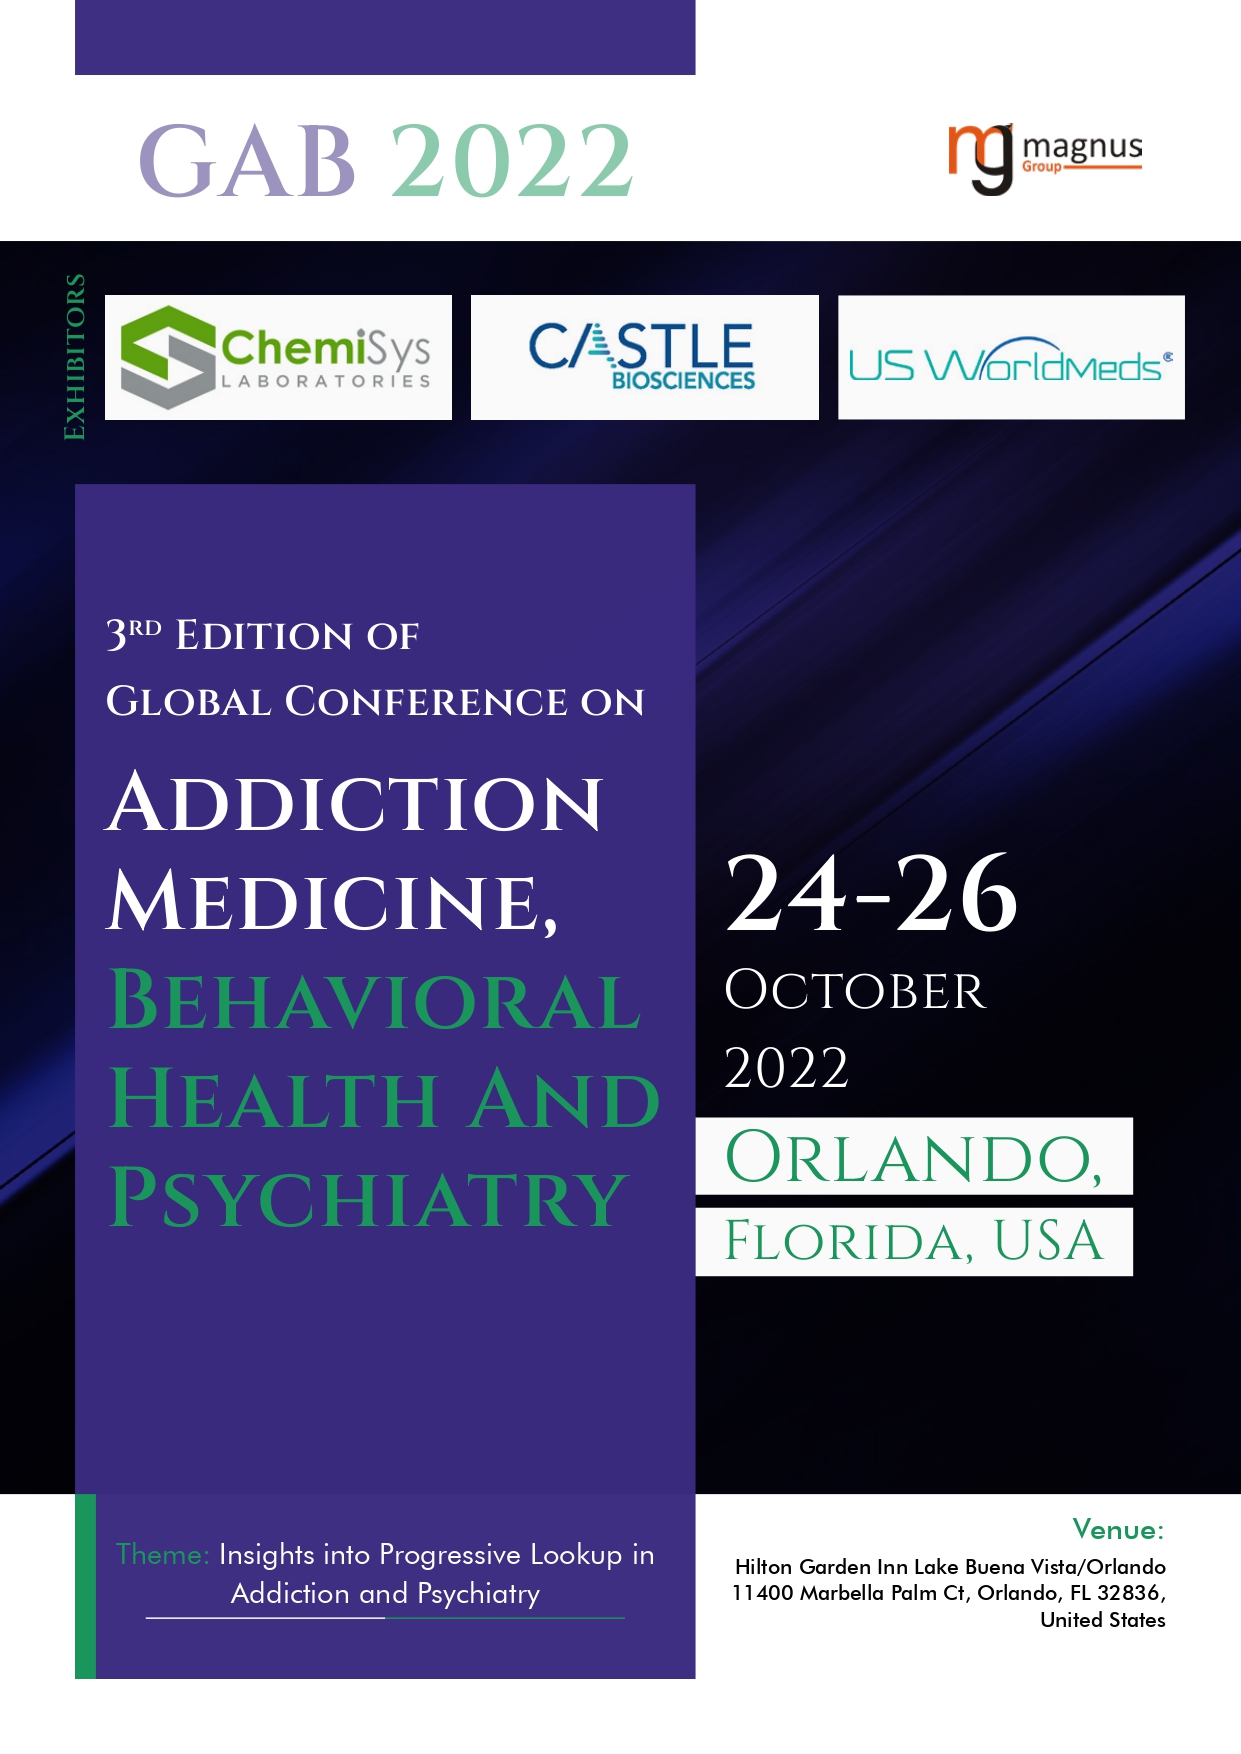 Addiction Medicine, Behavioral Health and Psychiatry | Orlando, Florida, USA Event Book